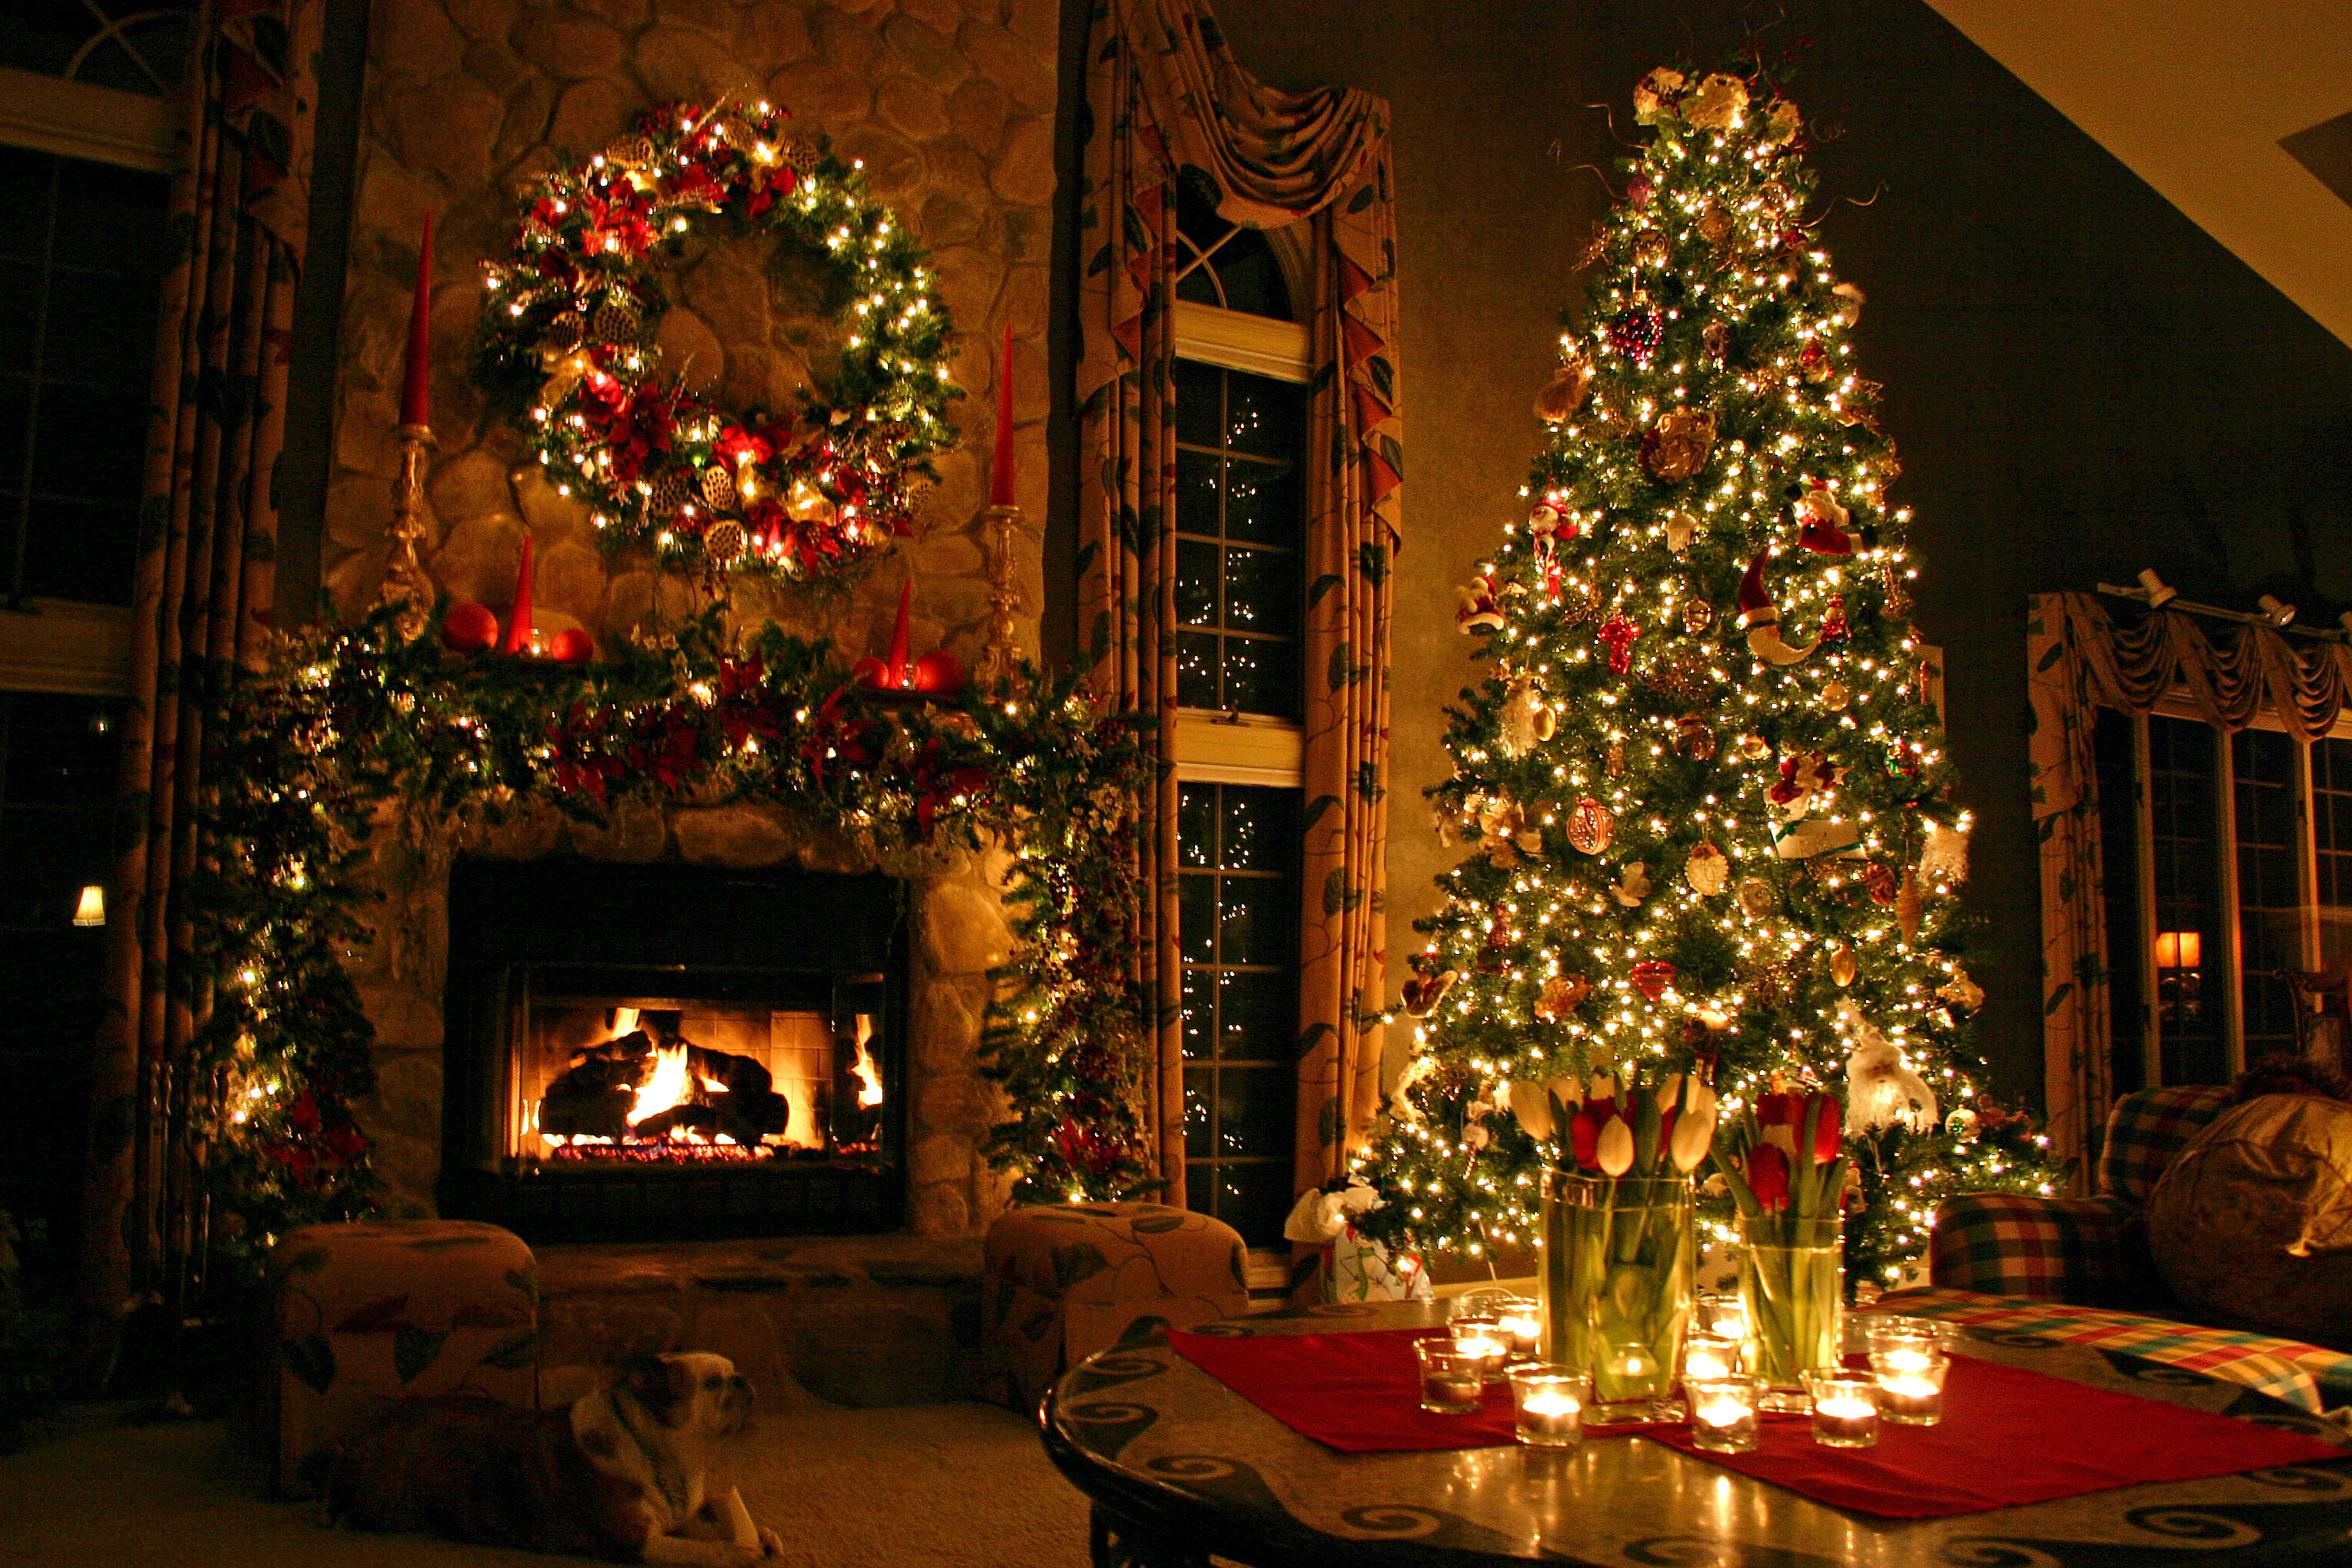 fond d'écran weihnachten,noël,sapin de noël,décoration de noël,lumières de noël,éclairage